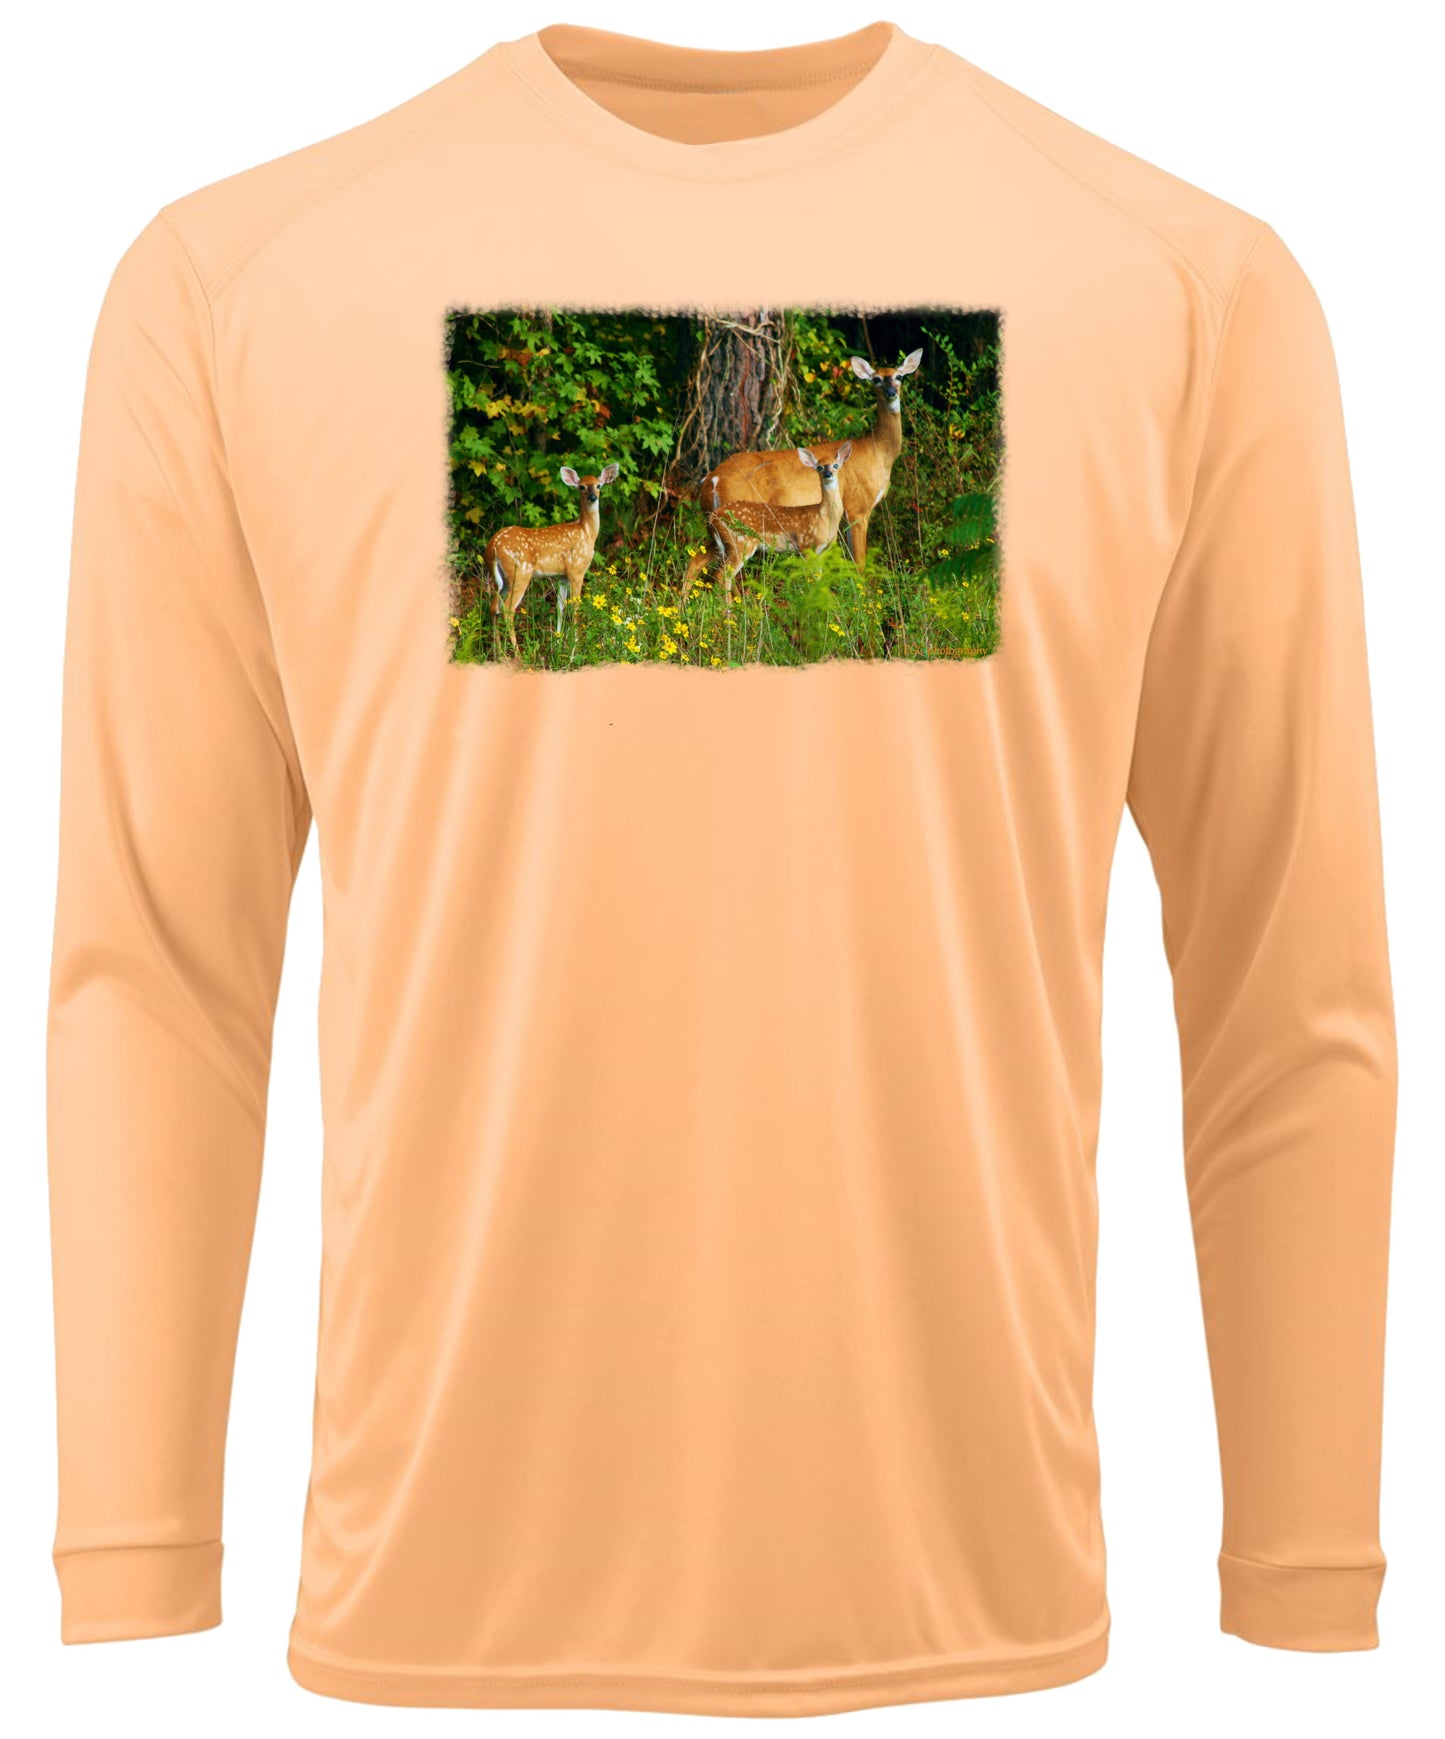 69 LM Two Fawn Long Sleeve UPF 50+ Shirt Deer Hunting Shirt Outdoor Shirt Wildlife Shirt